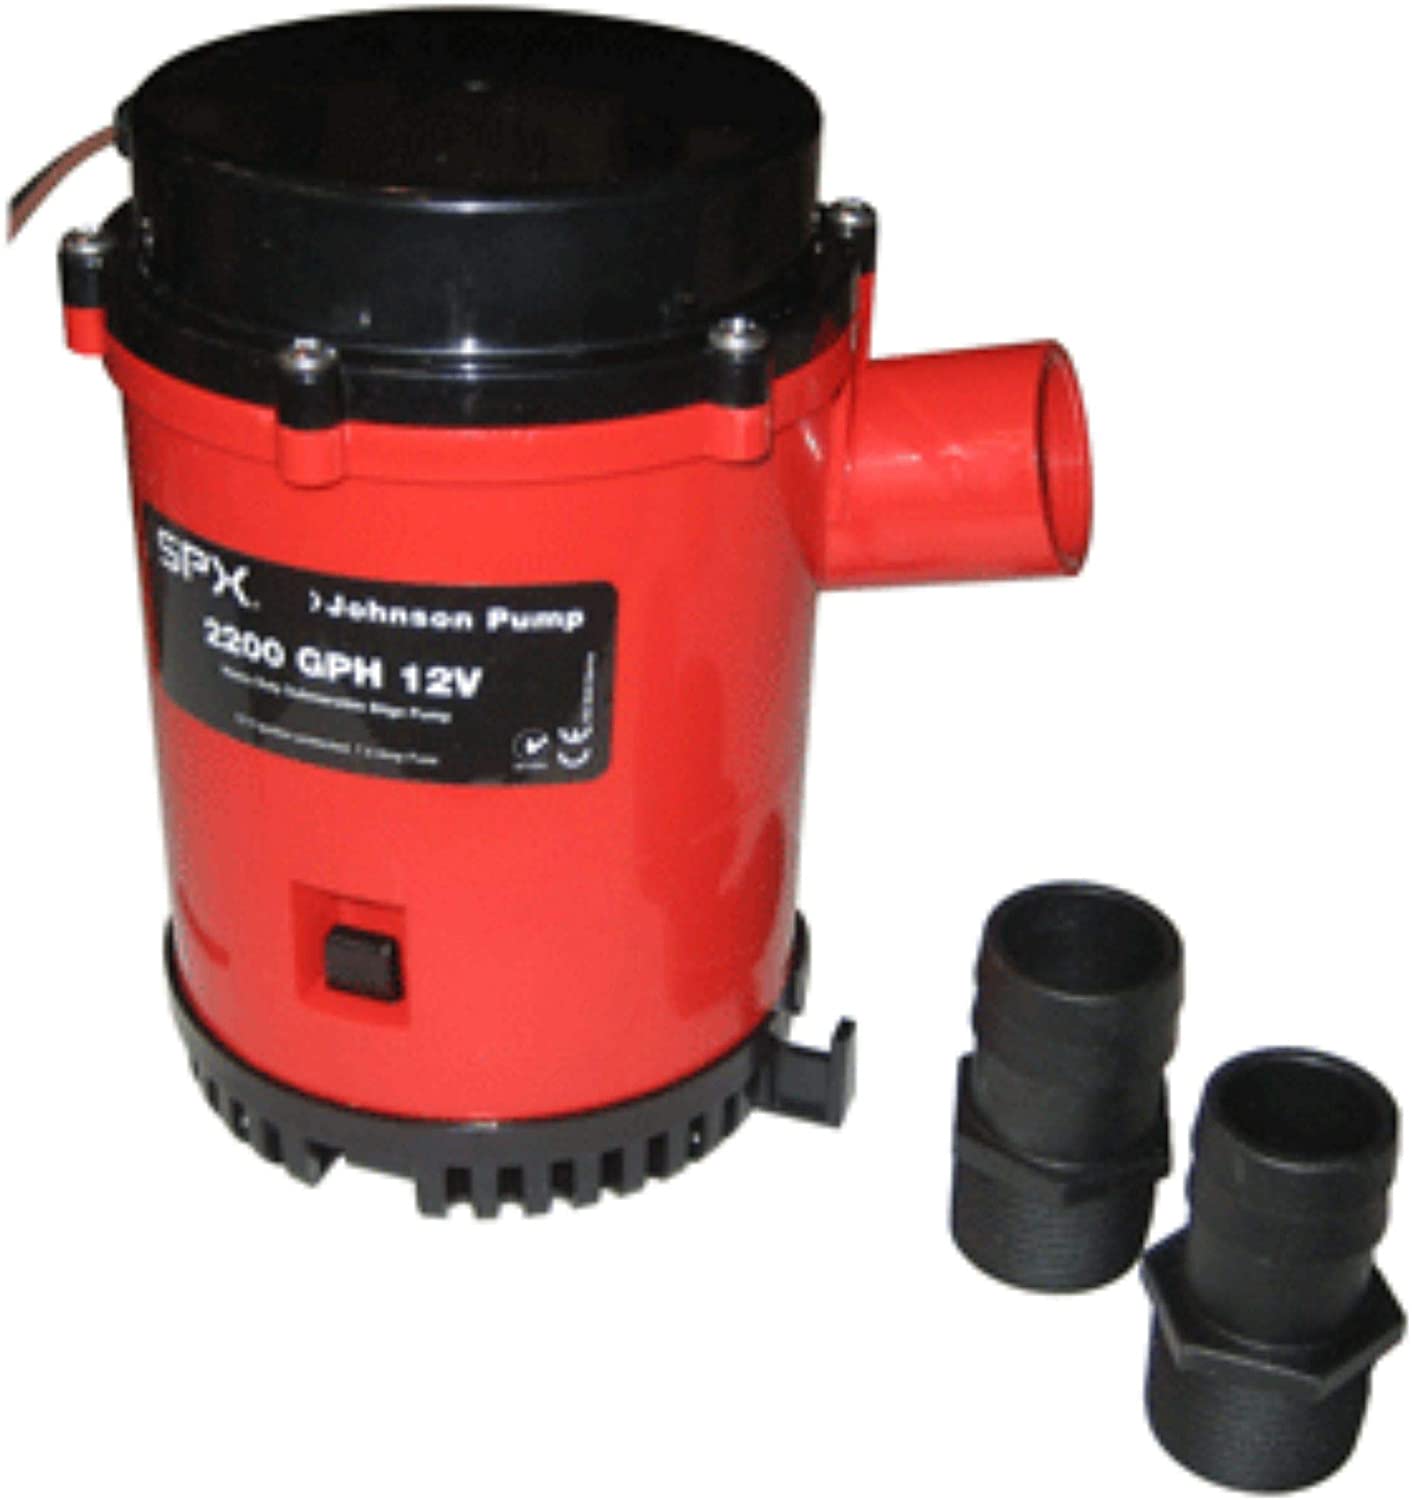 Johnson Pump - Heavy-Duty High-Capacity Bilge Pumps, Part No. 22004 - Volts 12 DC - Amps 7.5 - GPH 2200